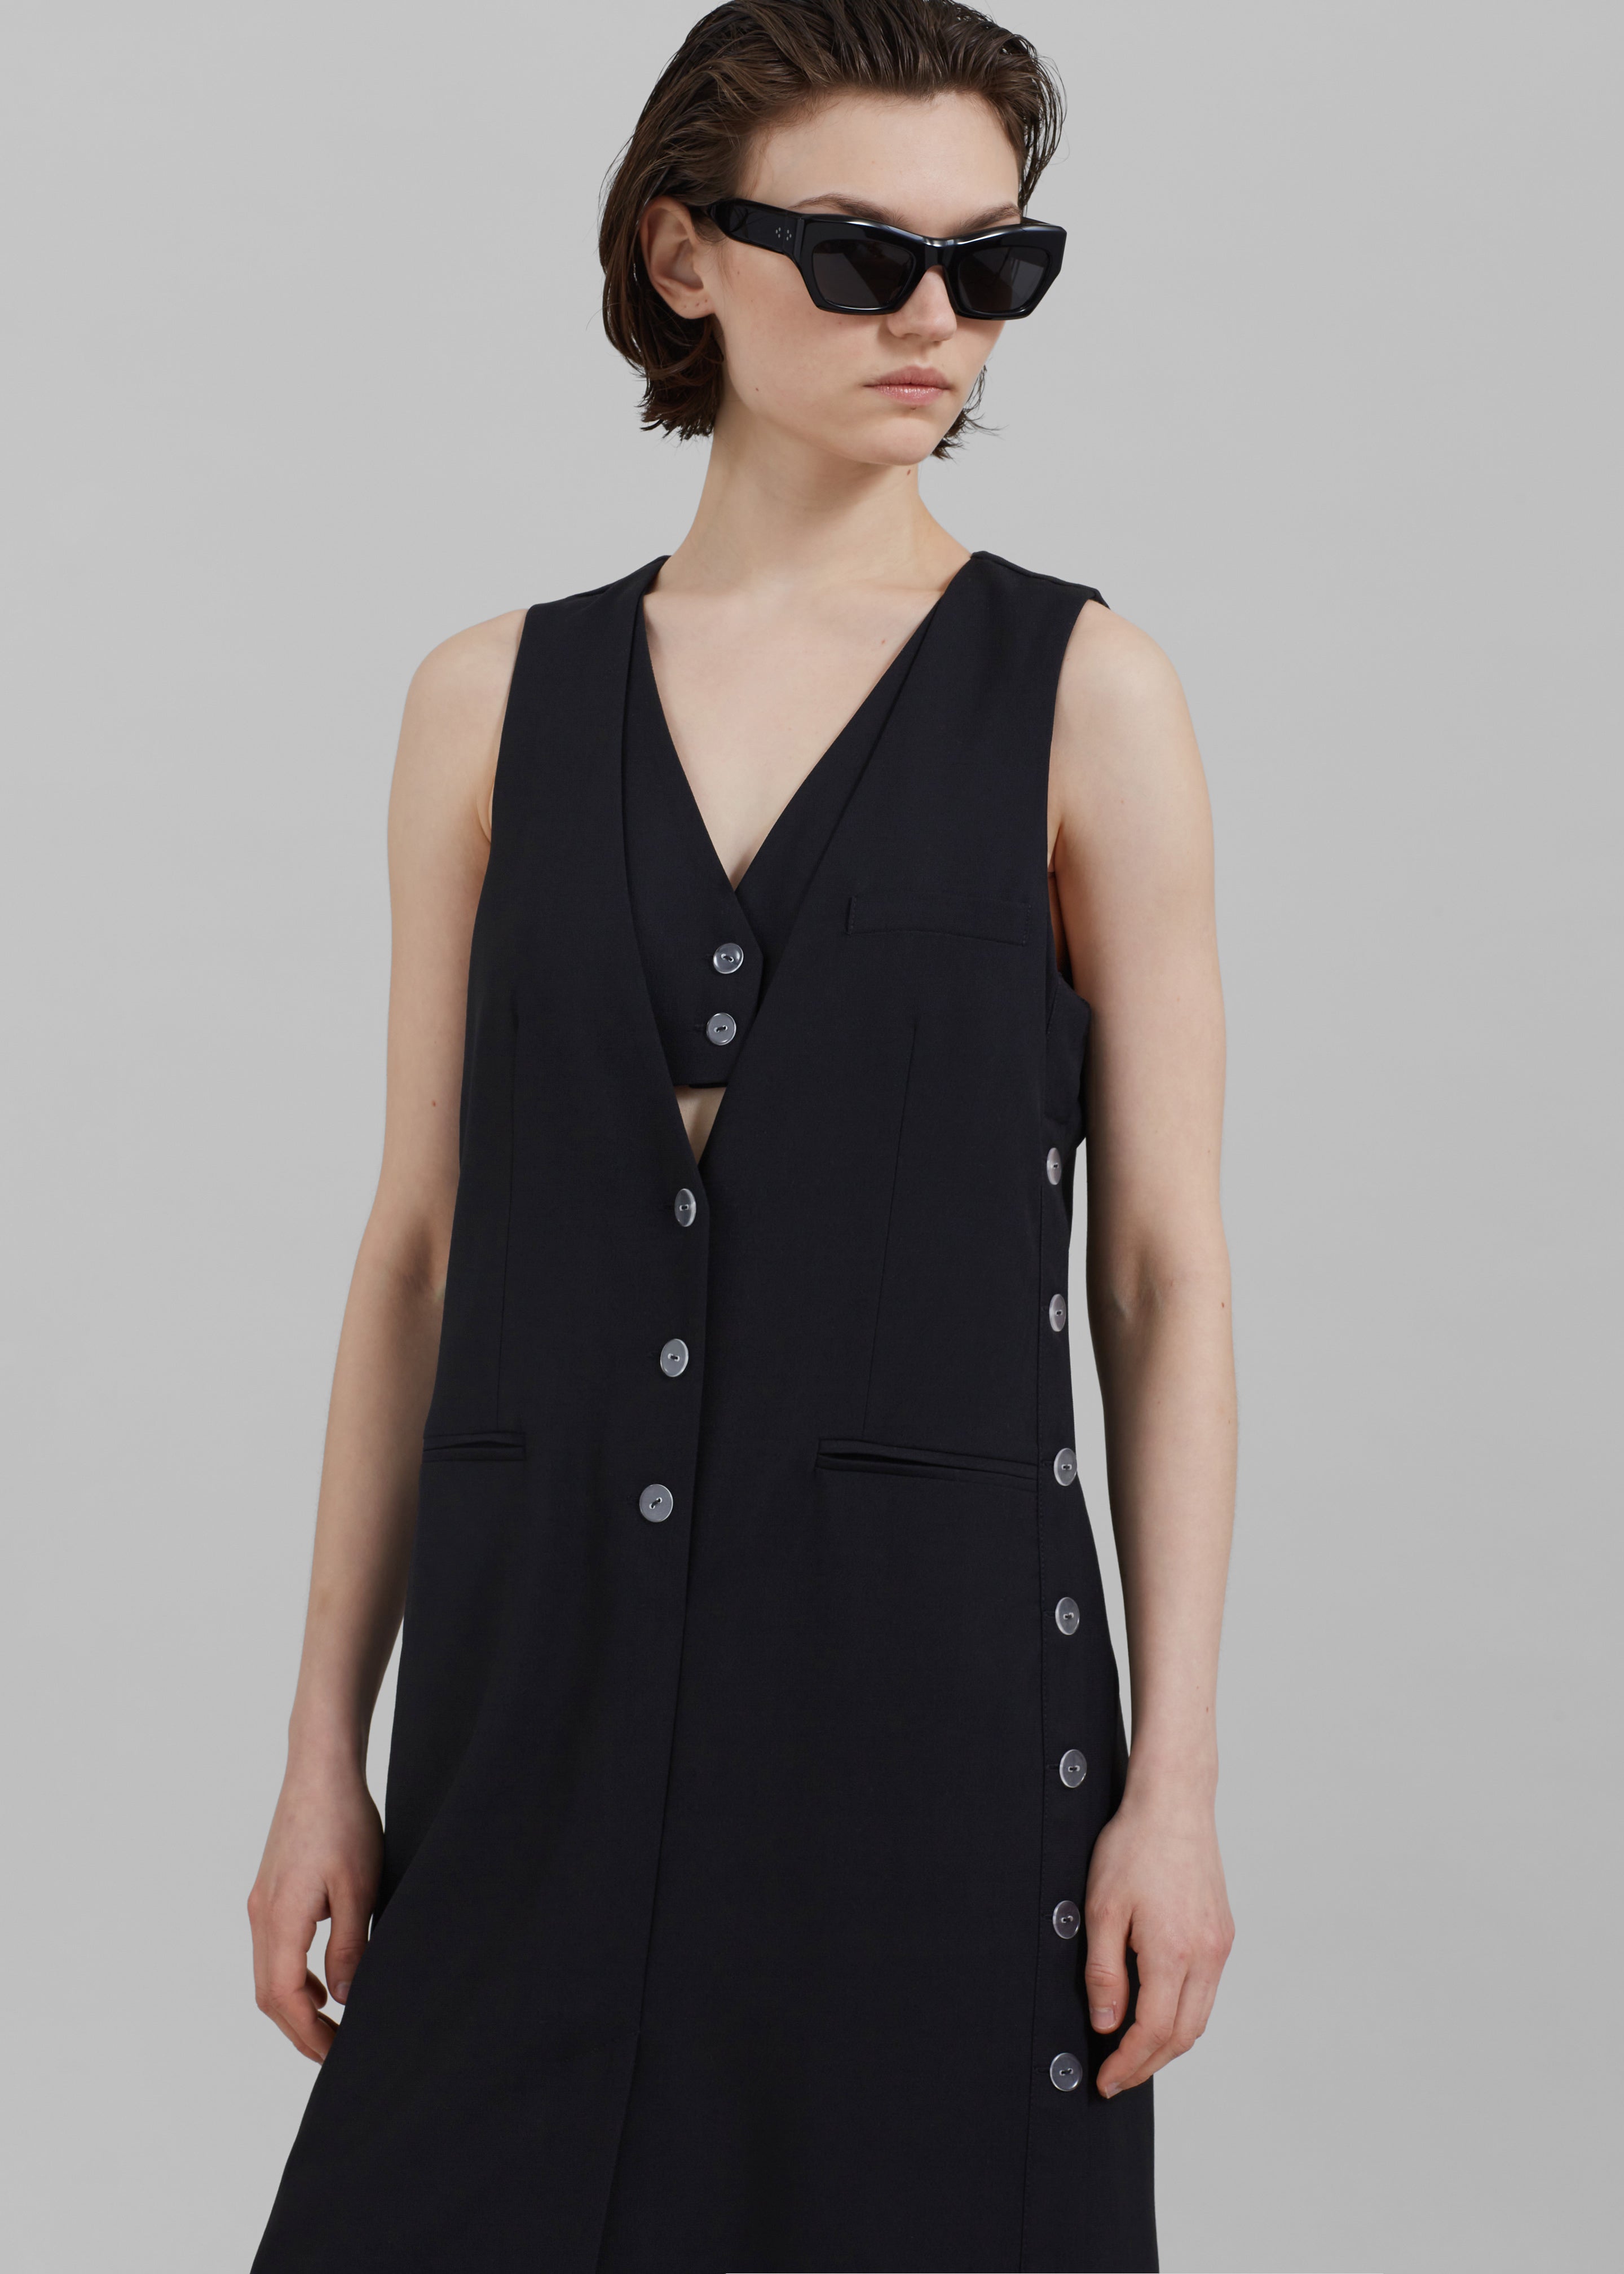 3.1 Phillip Lim Tailored Vest Dress with Set-In Bra - Black - 6